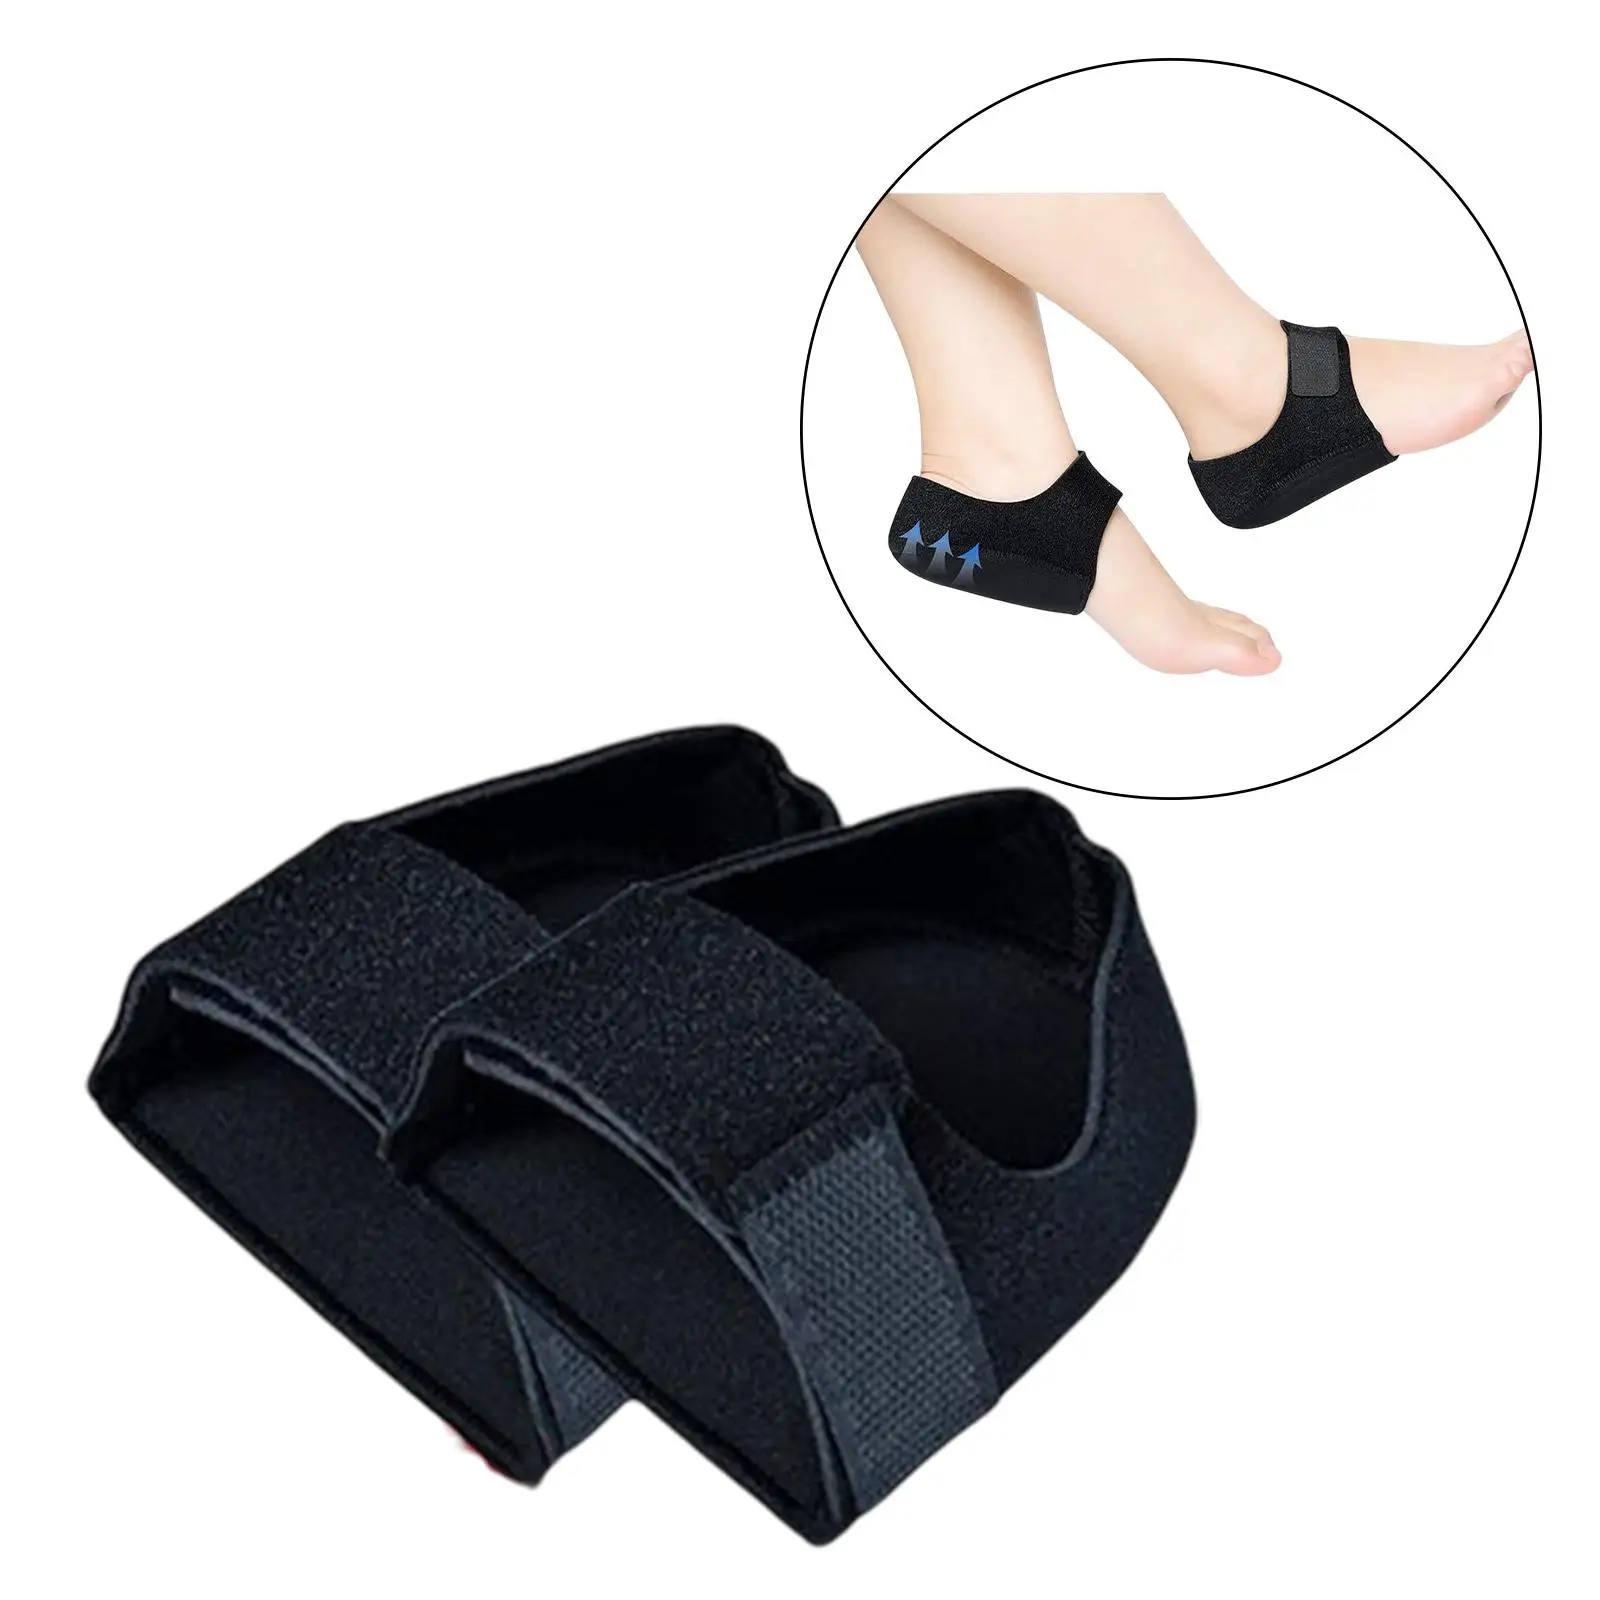 Silicone Heel Protector Plantar Fasciitis Inserts Cushion Cracked feet skins cares Unisex